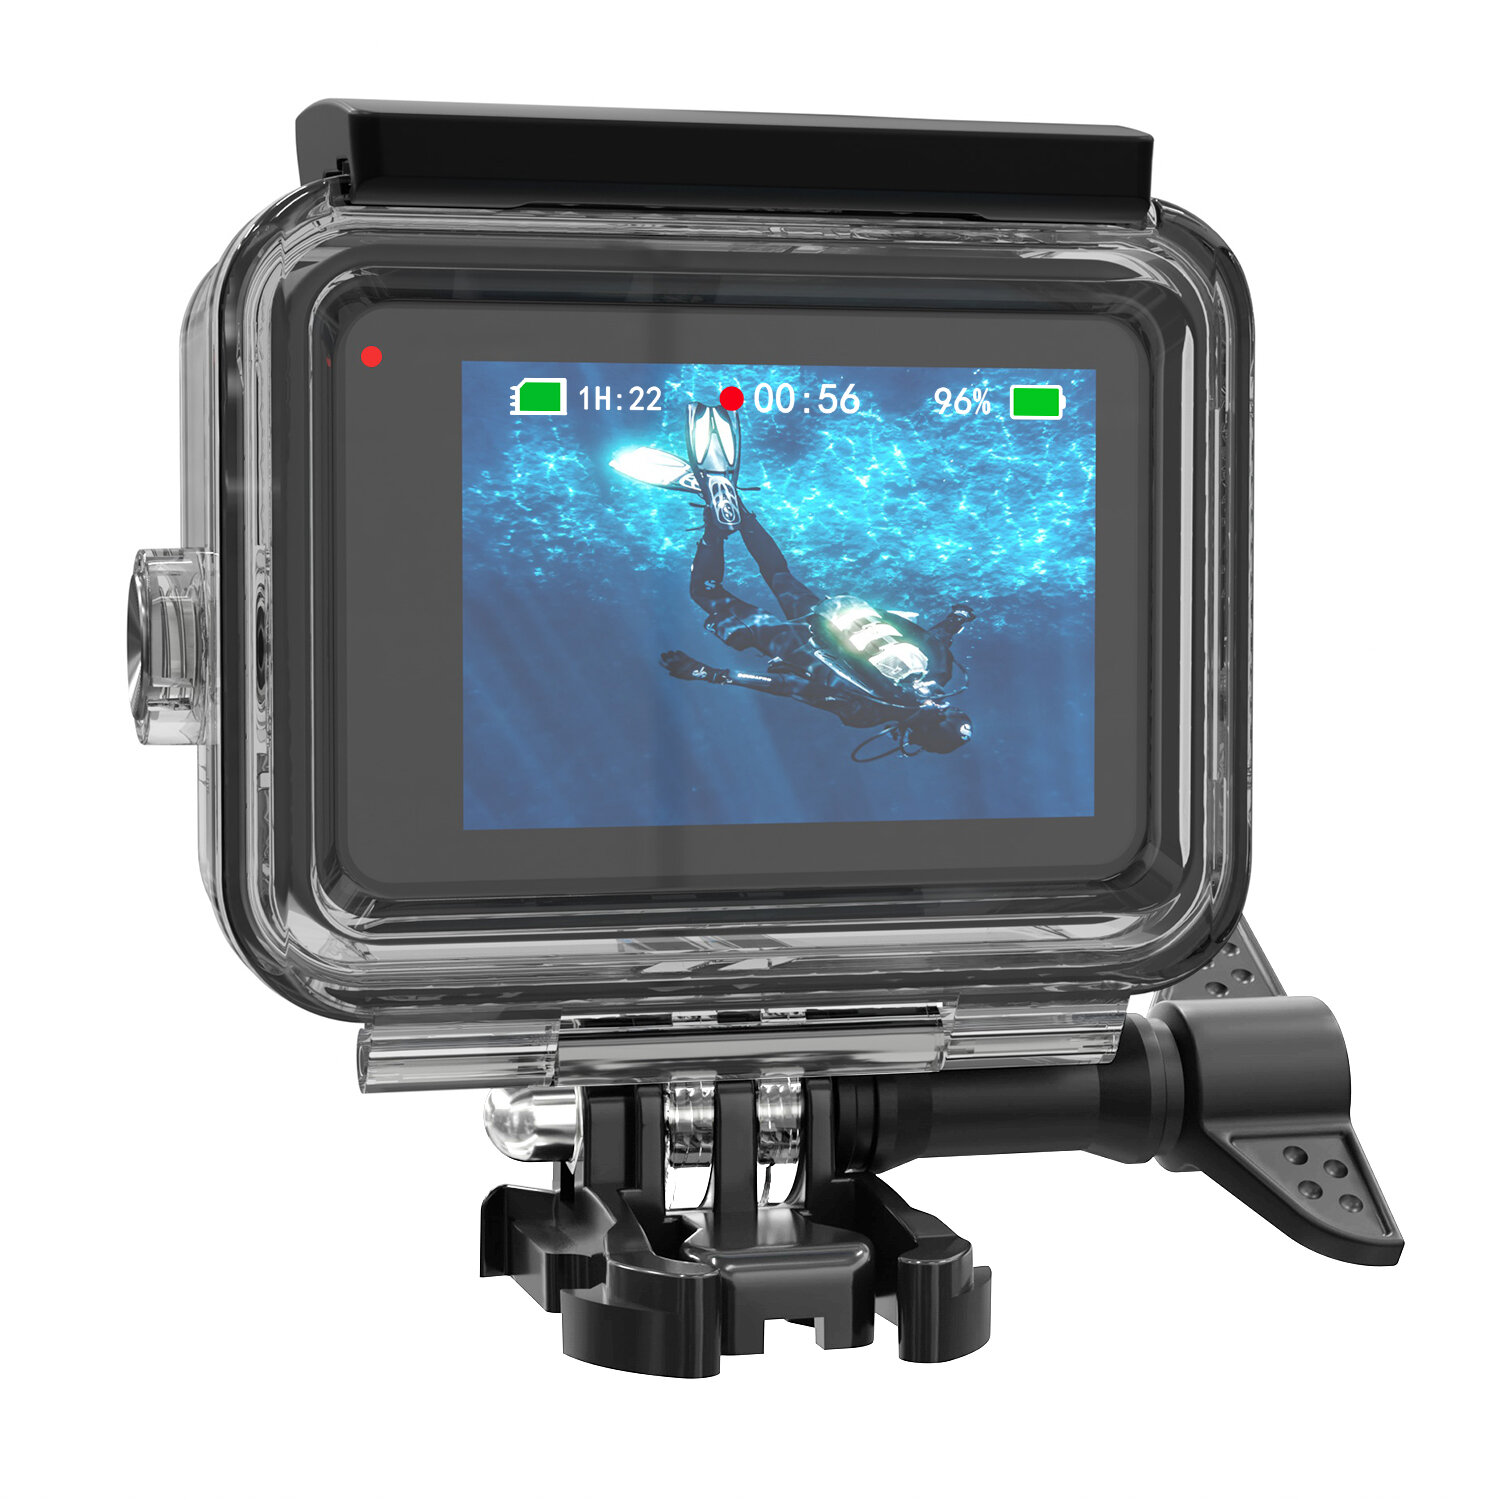 Sheingka 60m防水ハウジングシェル保護カバー（GoPro HERO 8ブラックハード保護ケースサポートタッチスクリーン用）